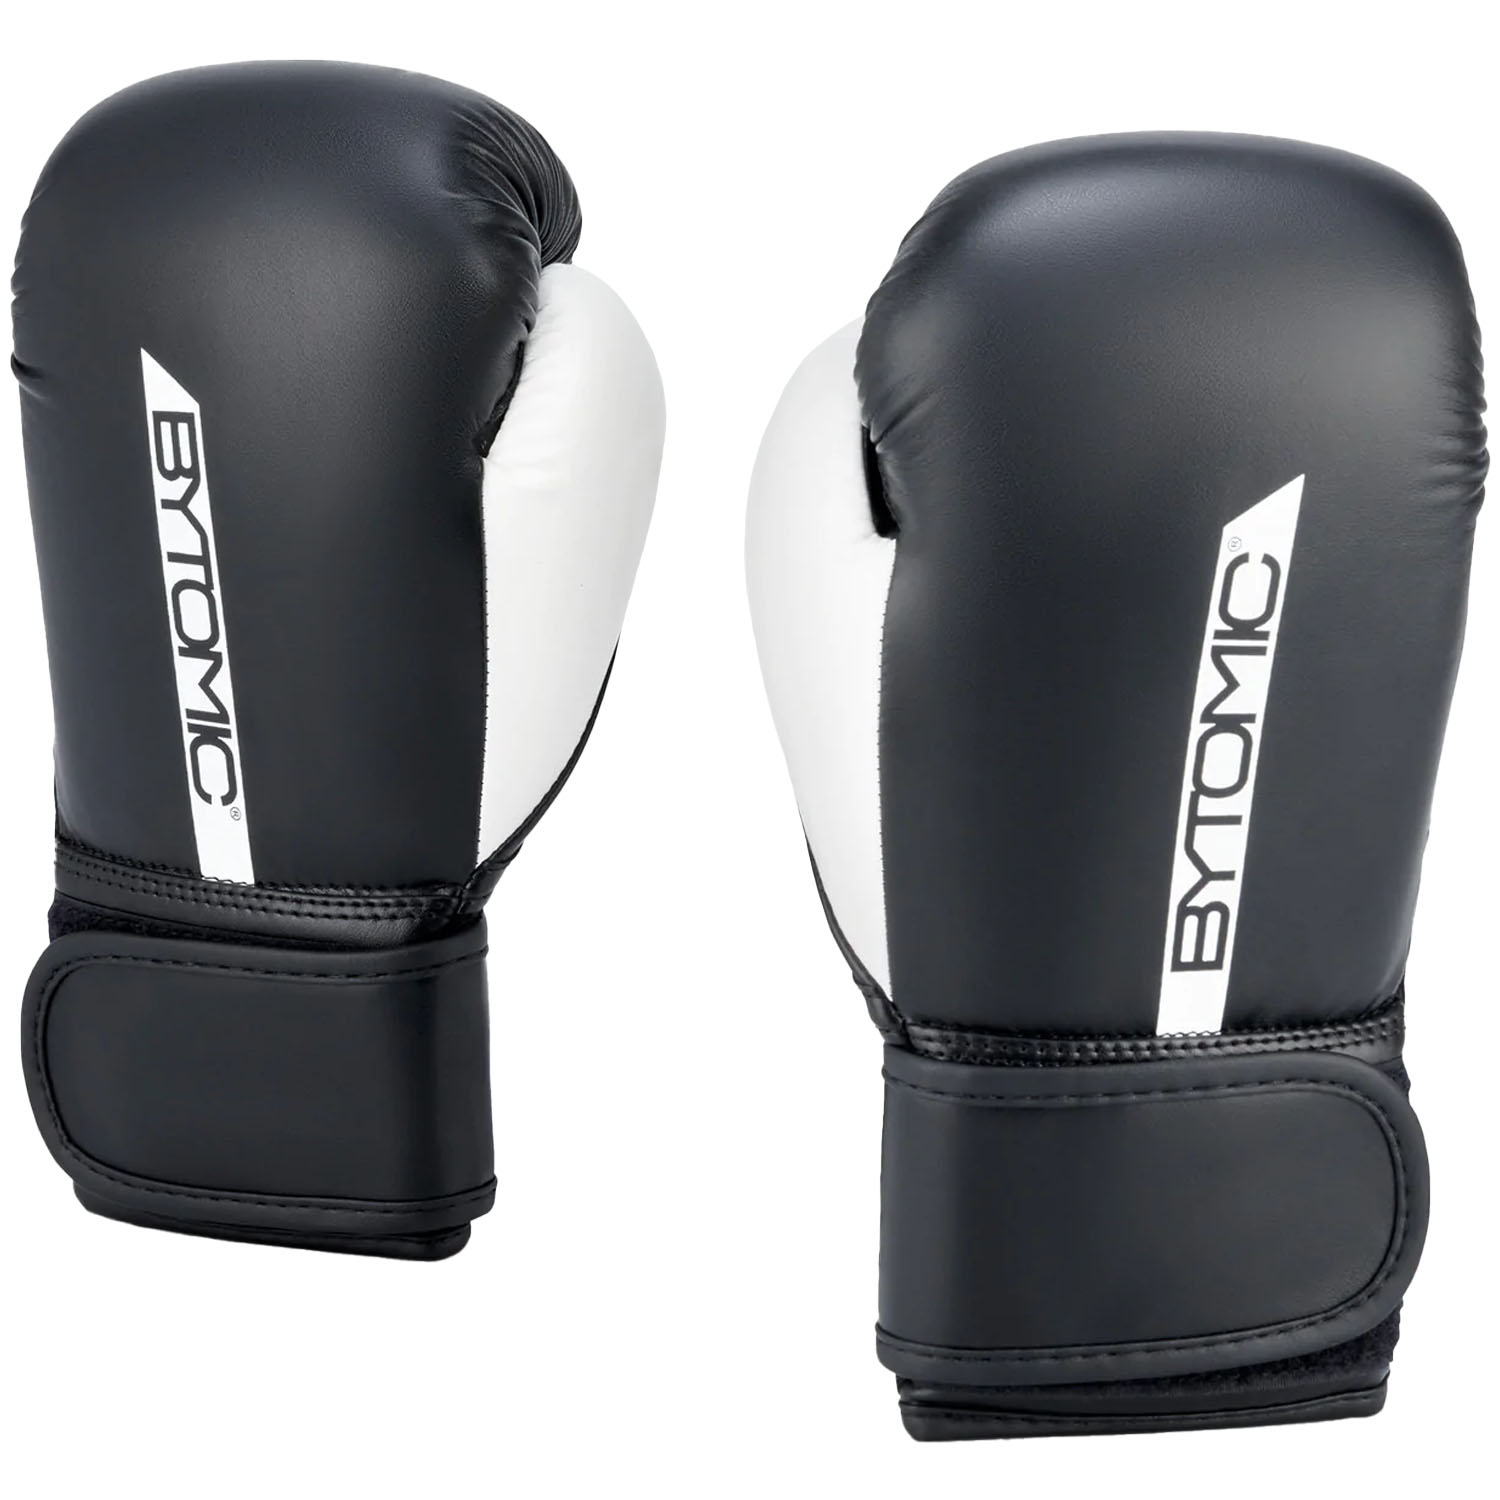 Bytomic Boxing Gloves, red Label, black-white, 12 Oz